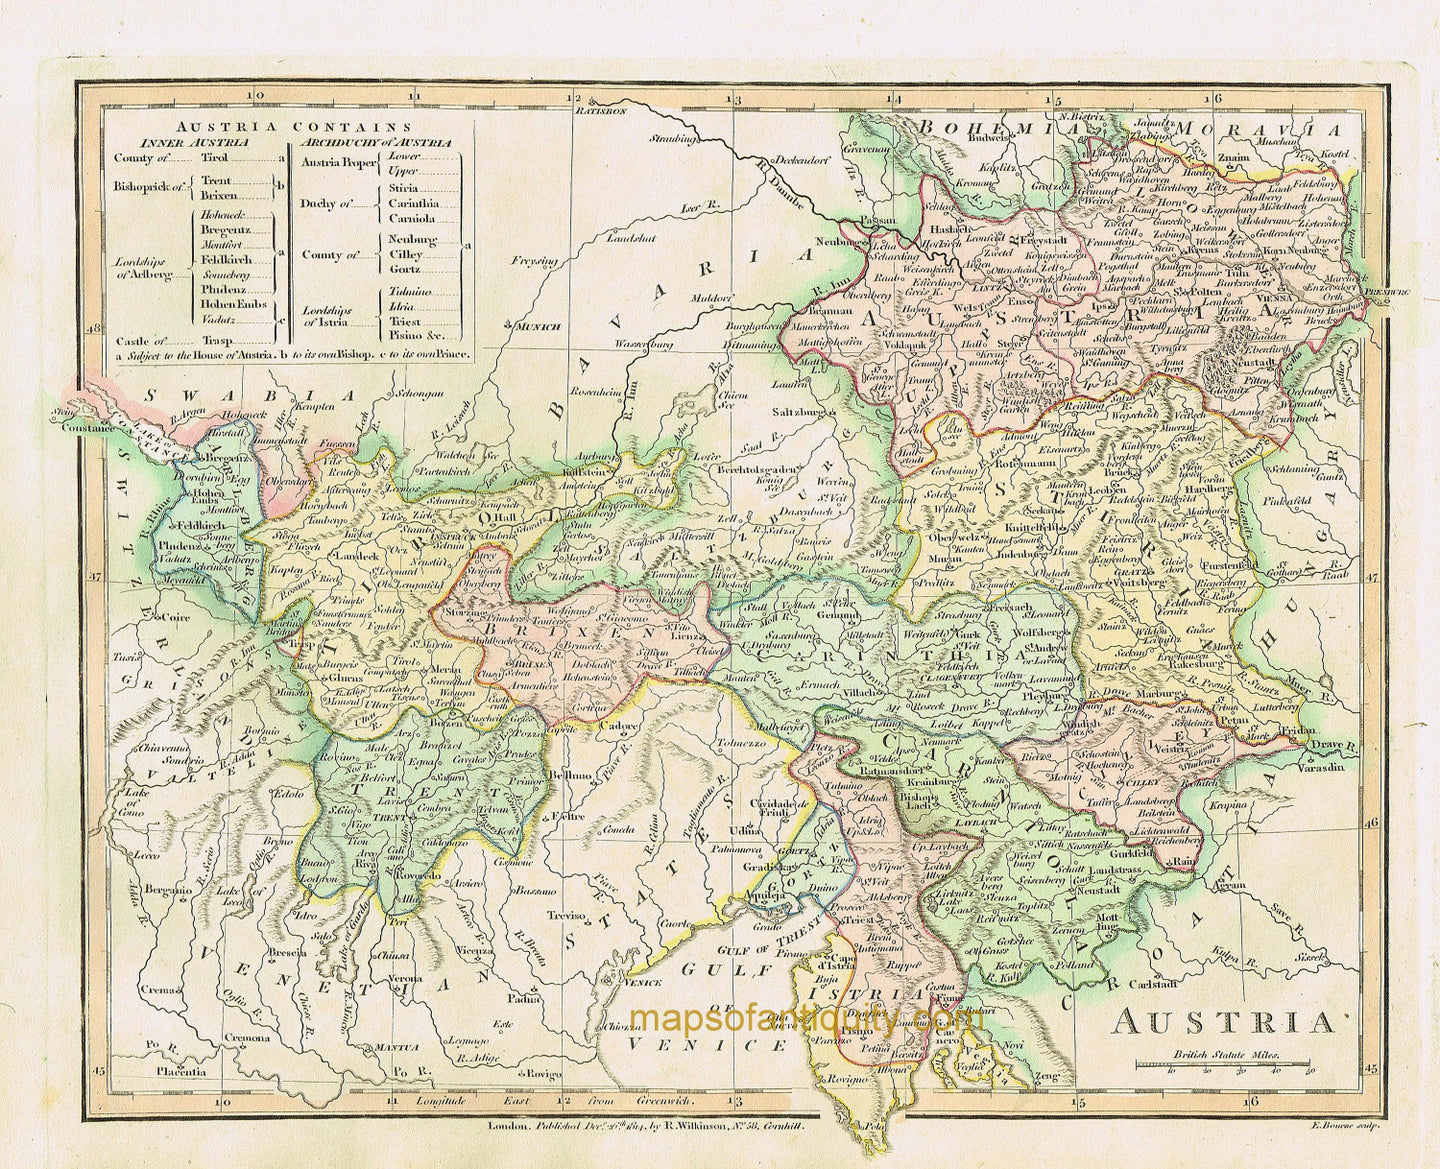 Antique-Hand-Colored-Map-Austria-Europe-Austria-1827-Wilkinson-Maps-Of-Antiquity